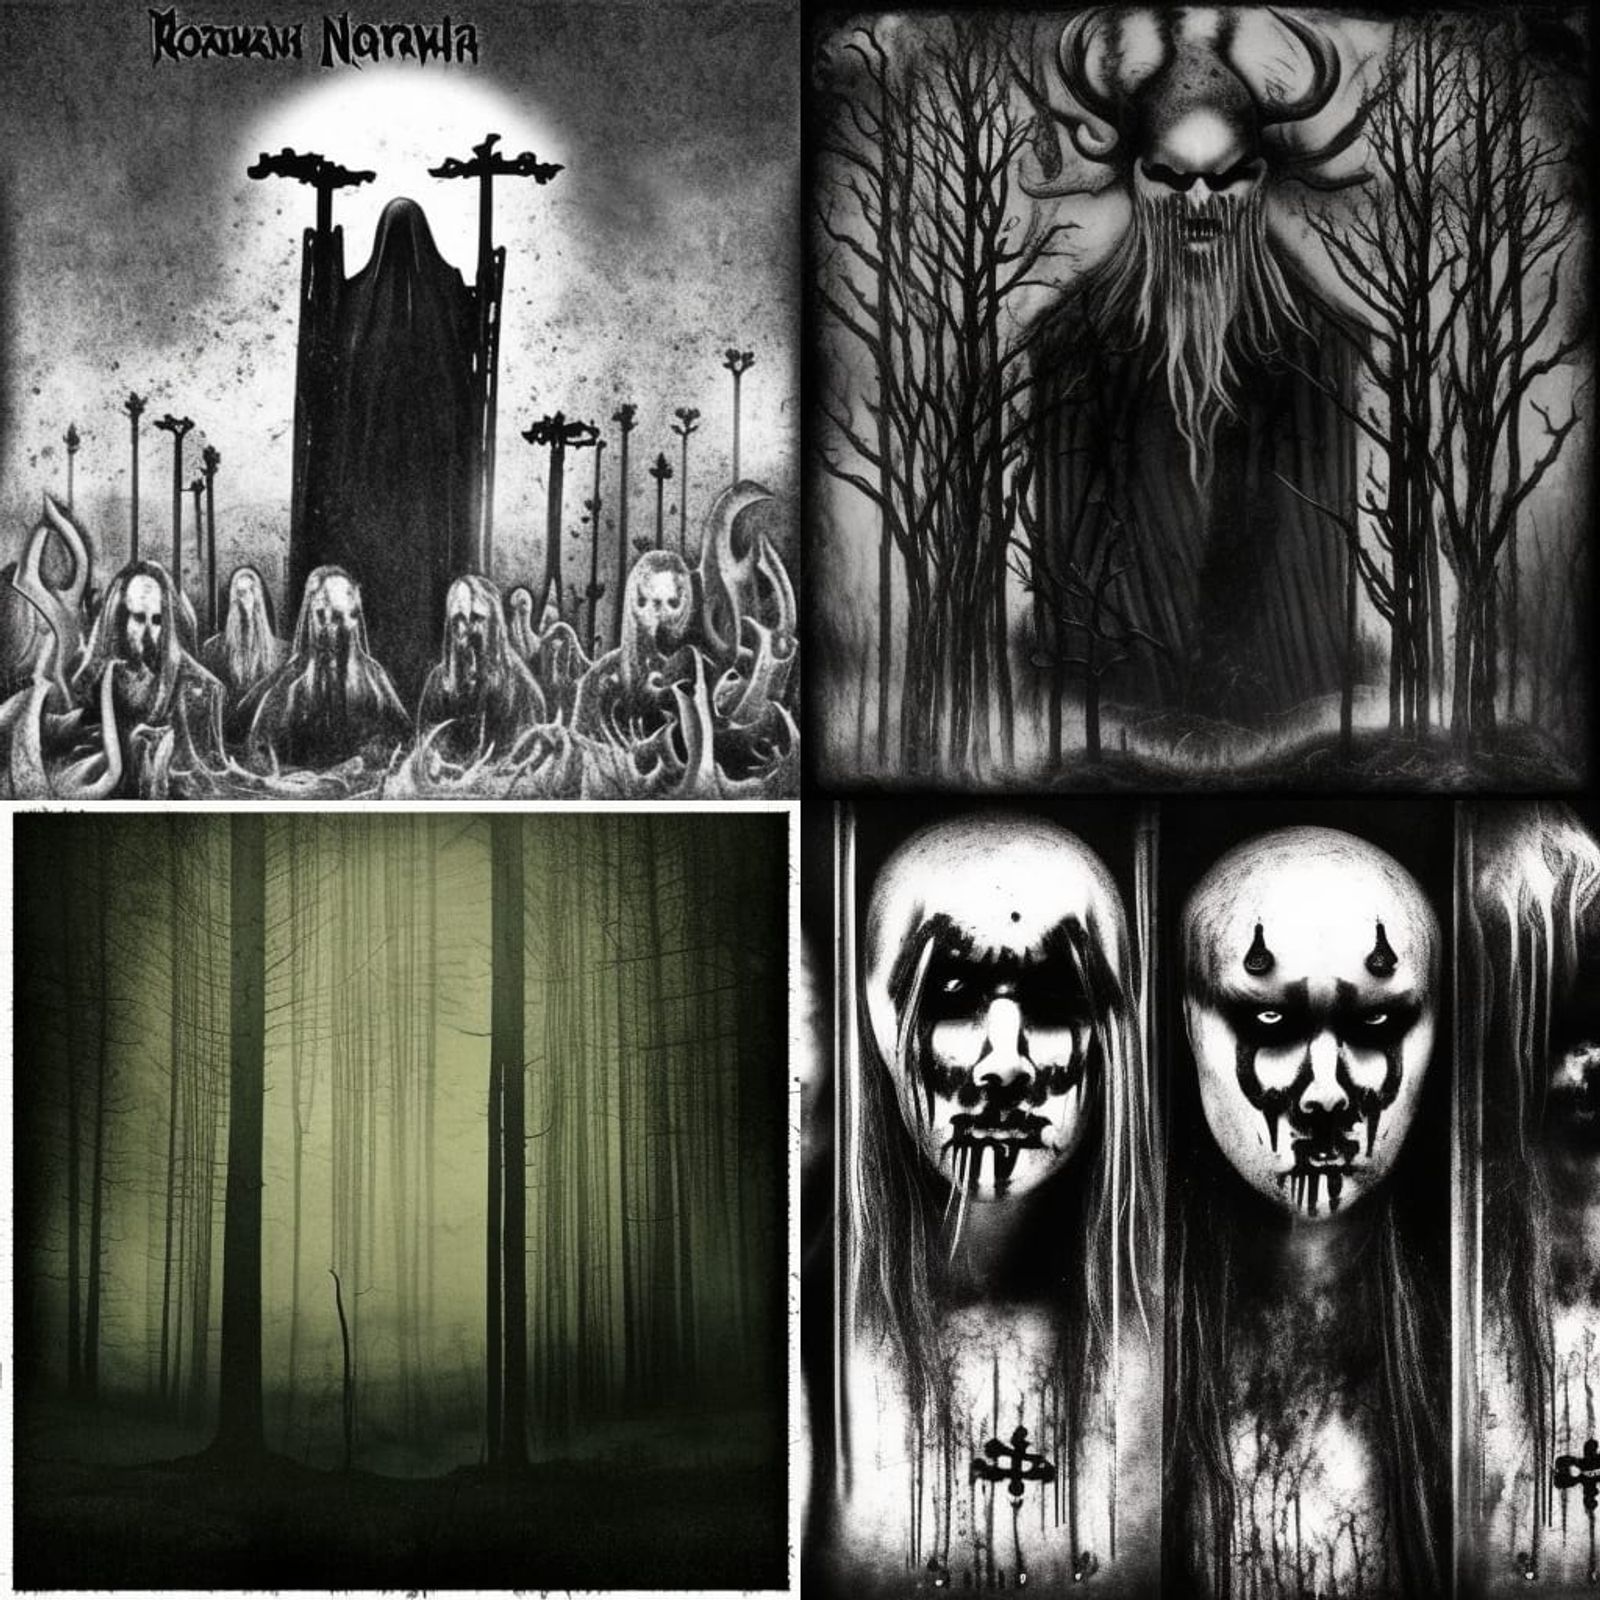 black metal album covers